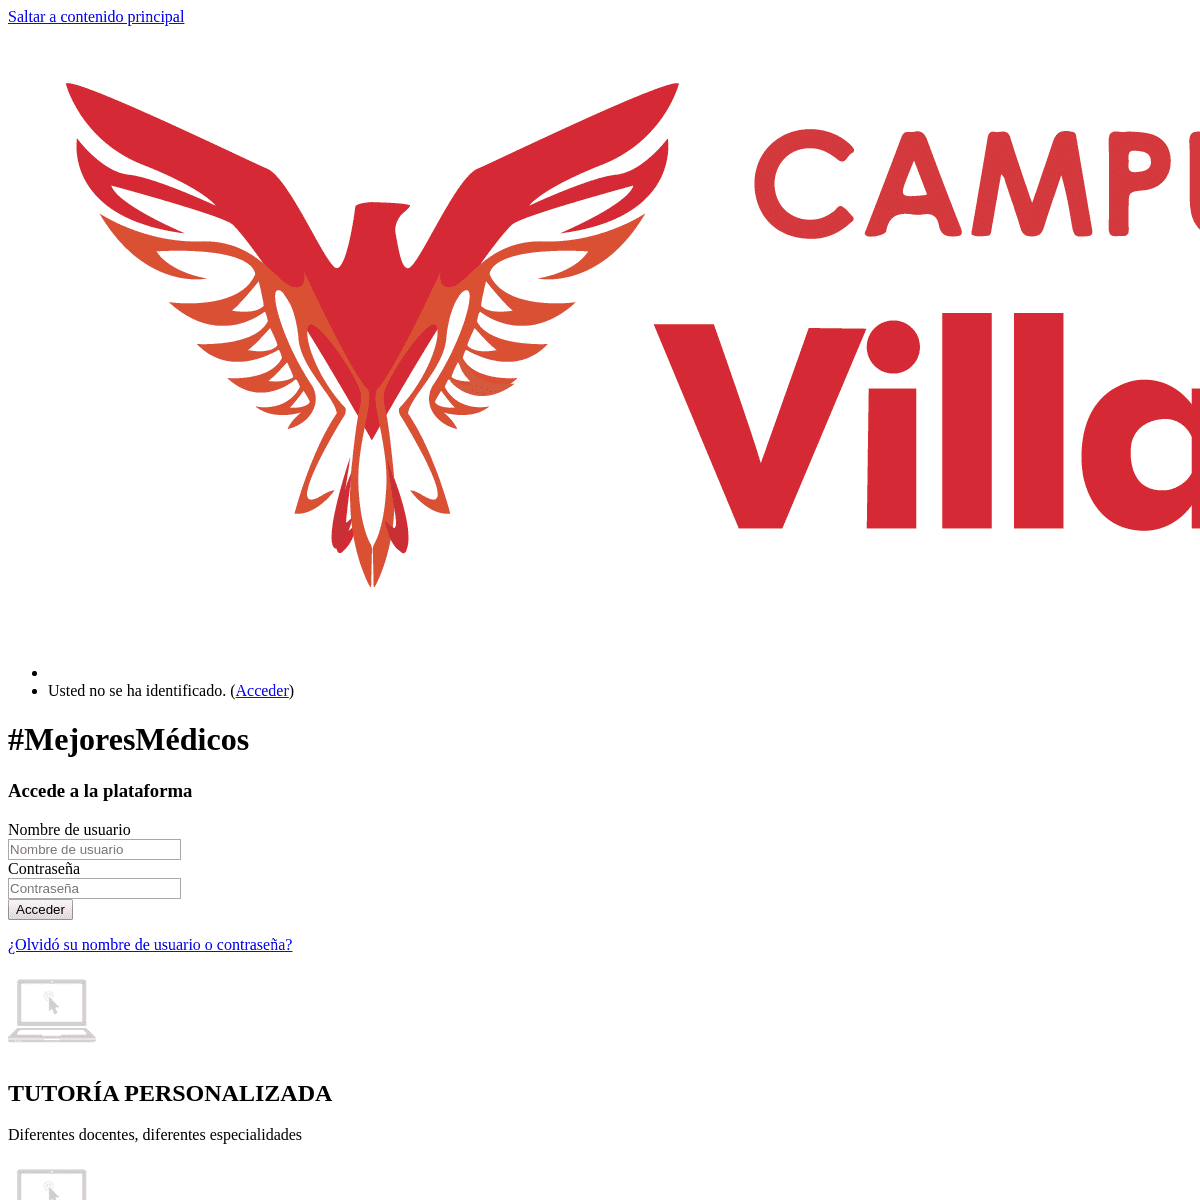 A complete backup of campusvirtualvillamedic.com